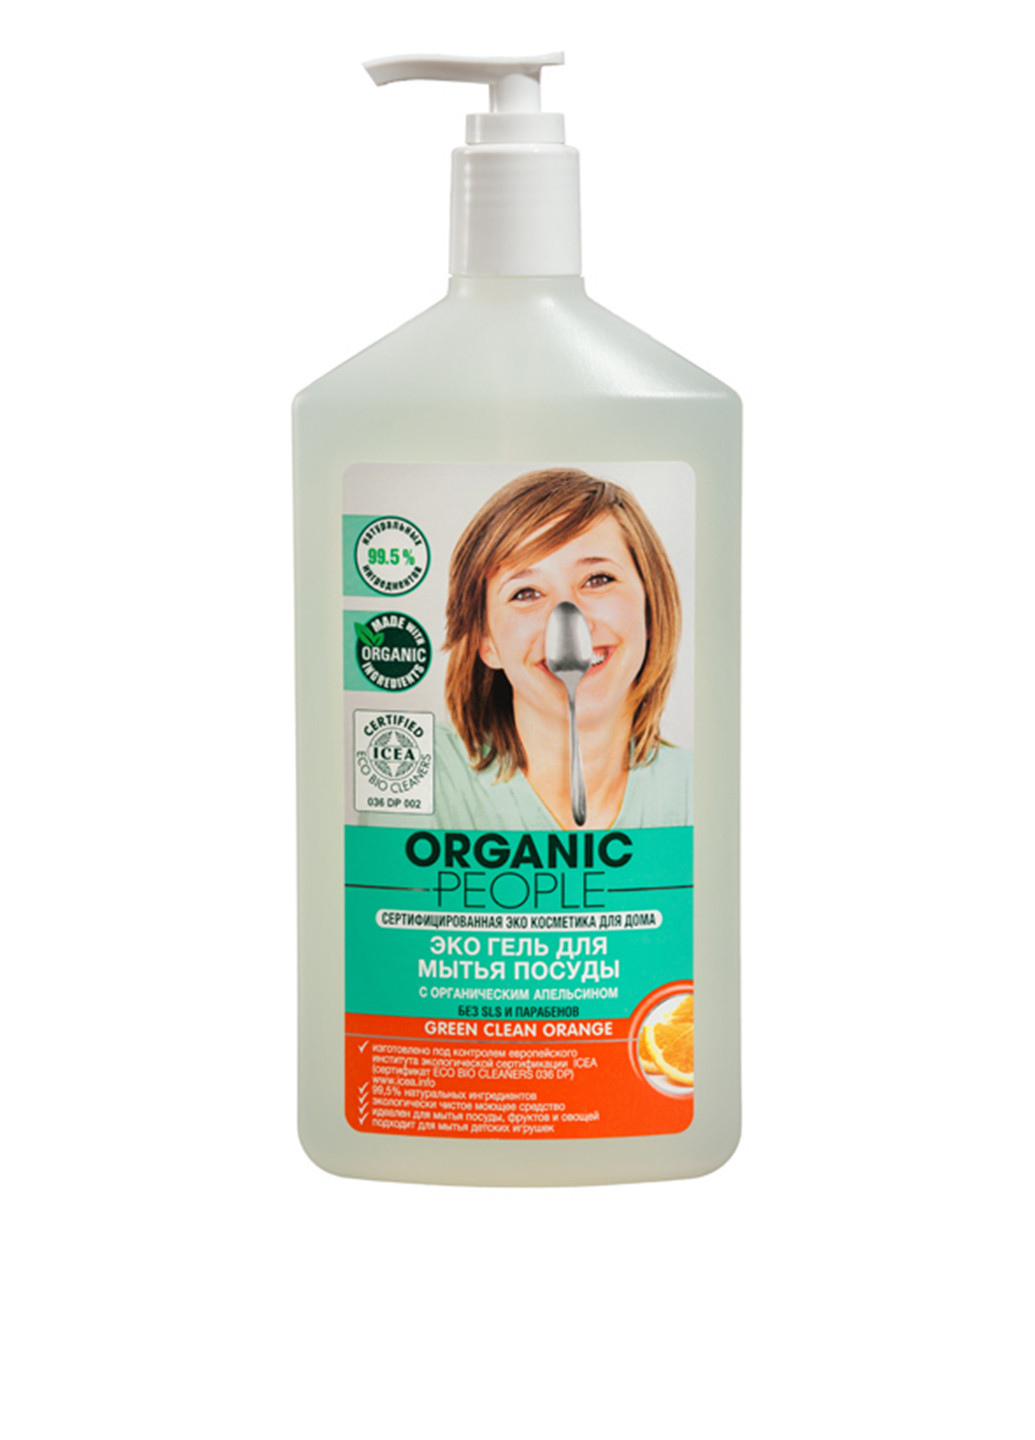 Еко-Гель для мытья посуды Green clean Orange, 500 мл Organic People (58125939)